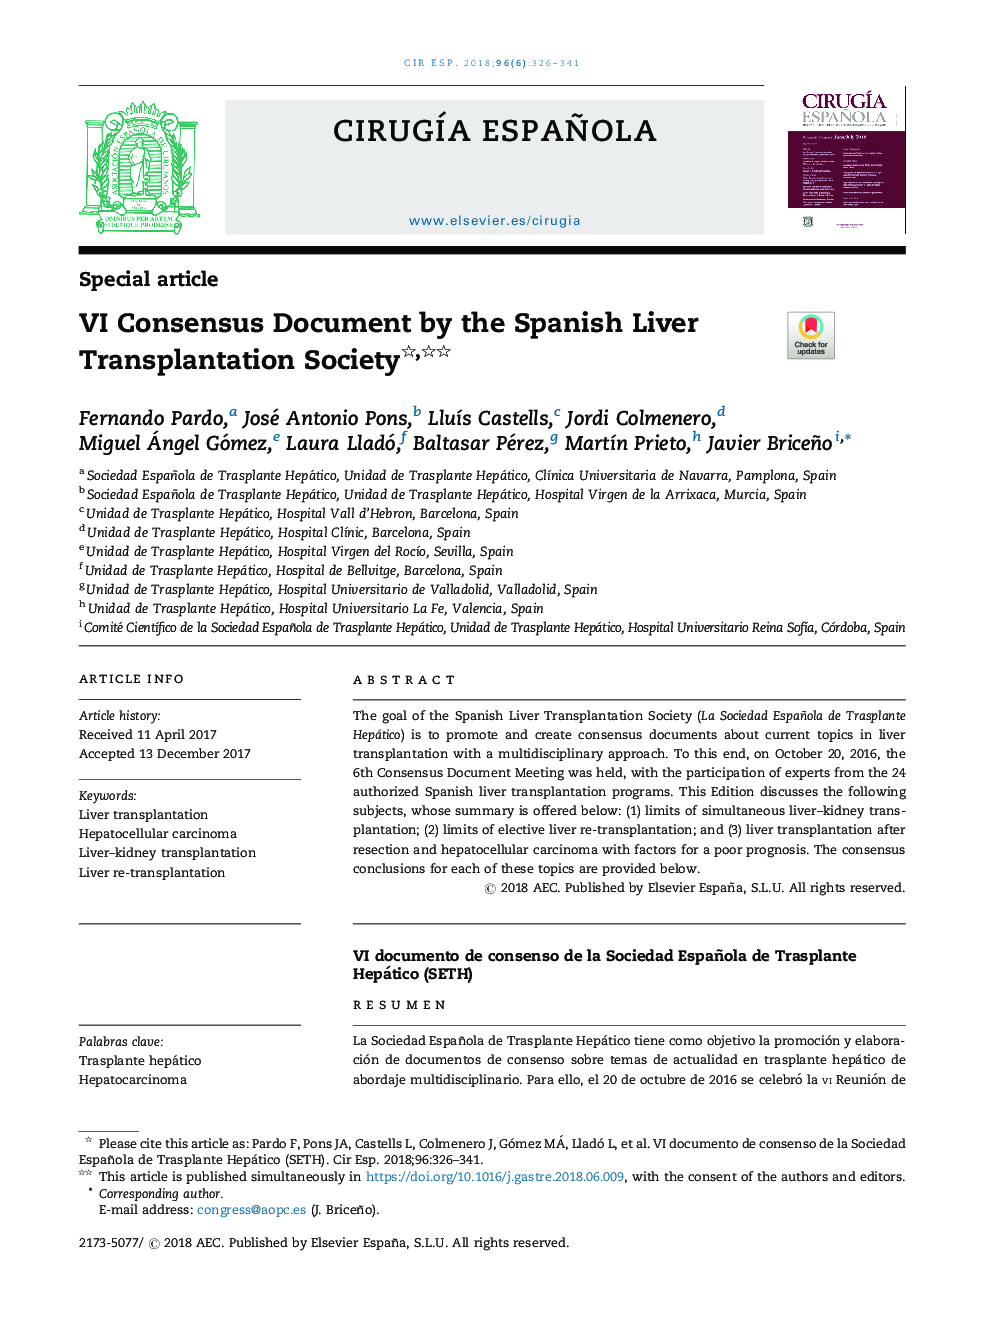 VI Consensus Document by the Spanish Liver Transplantation Society